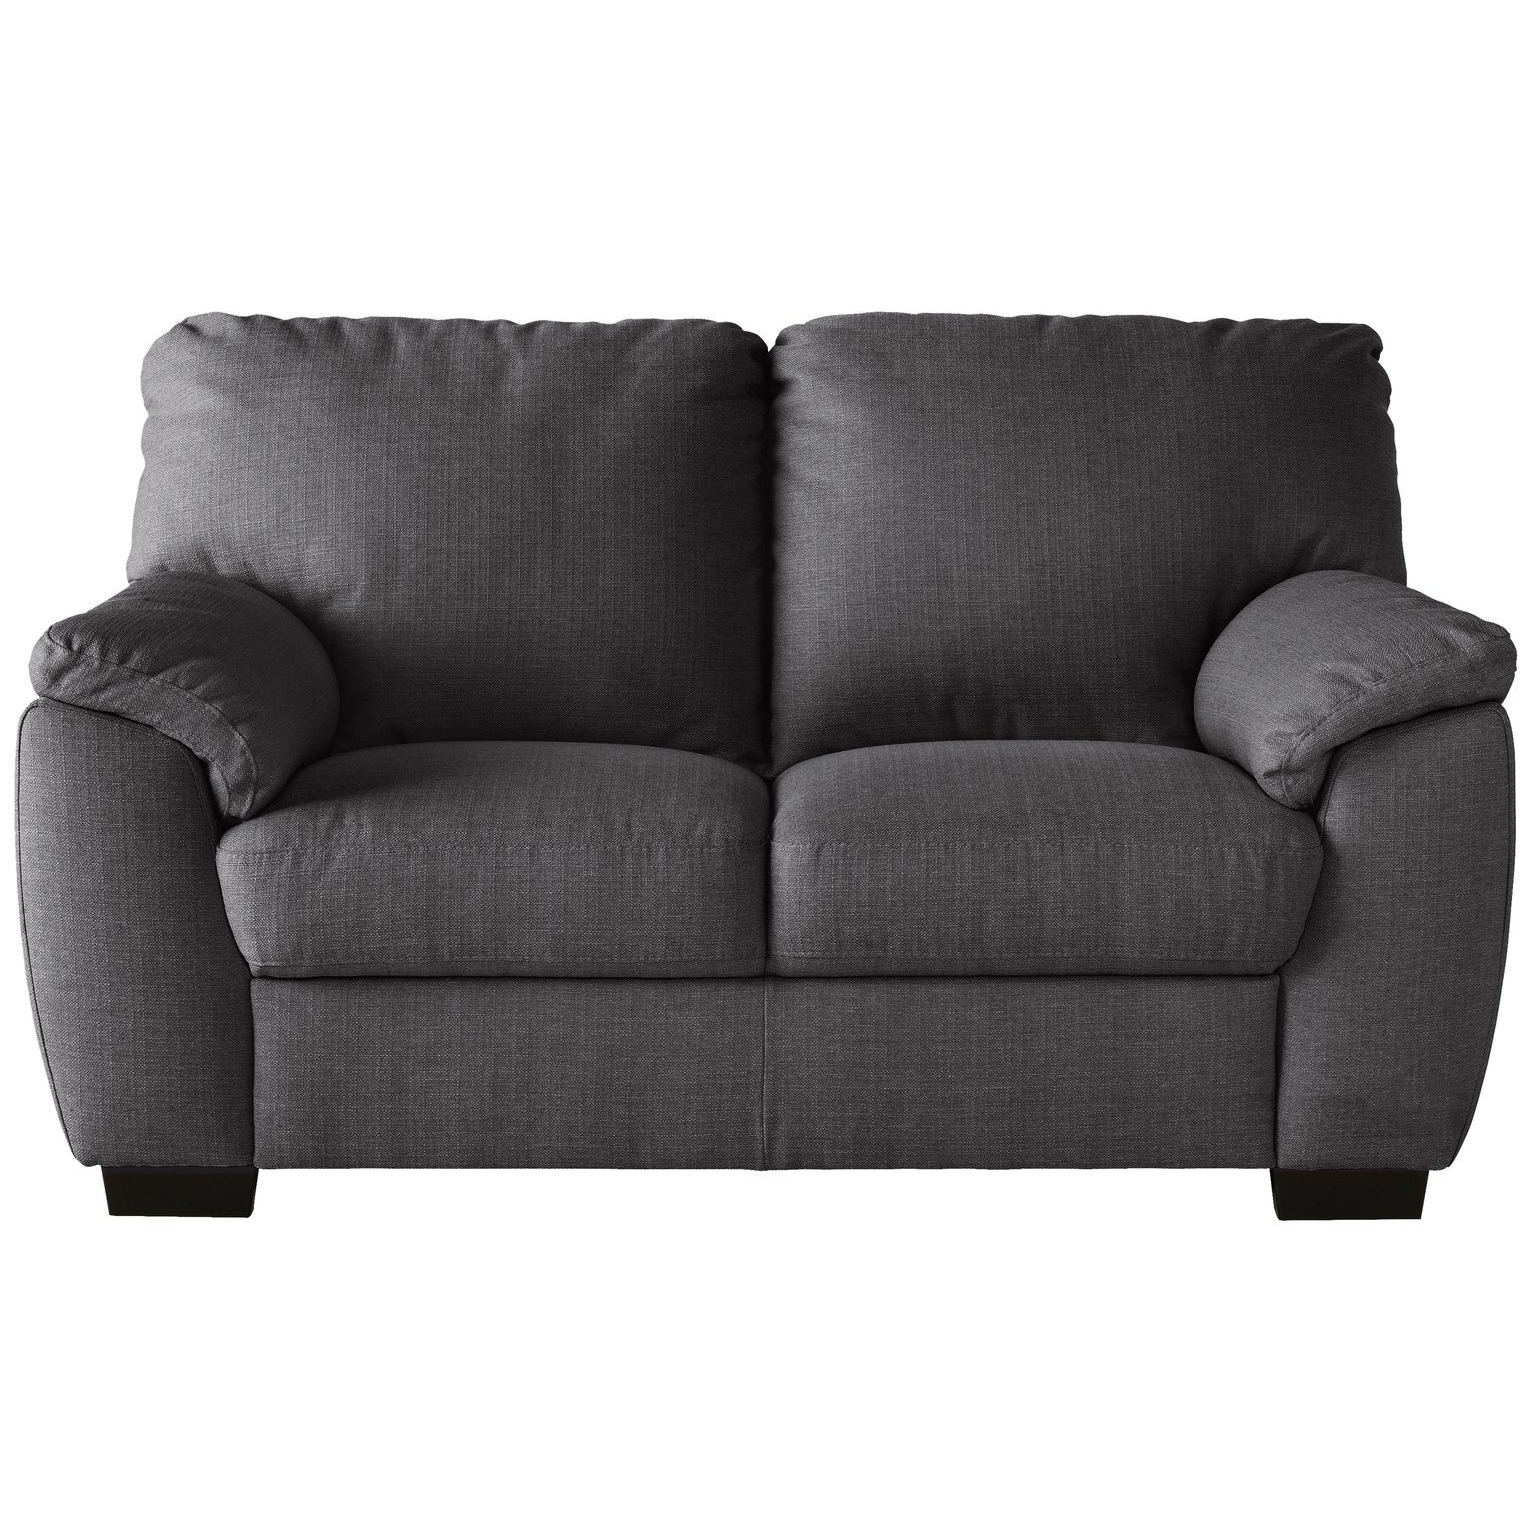 Argos Home Milano Fabric 2 Seater Sofa - Charcoal - image 1